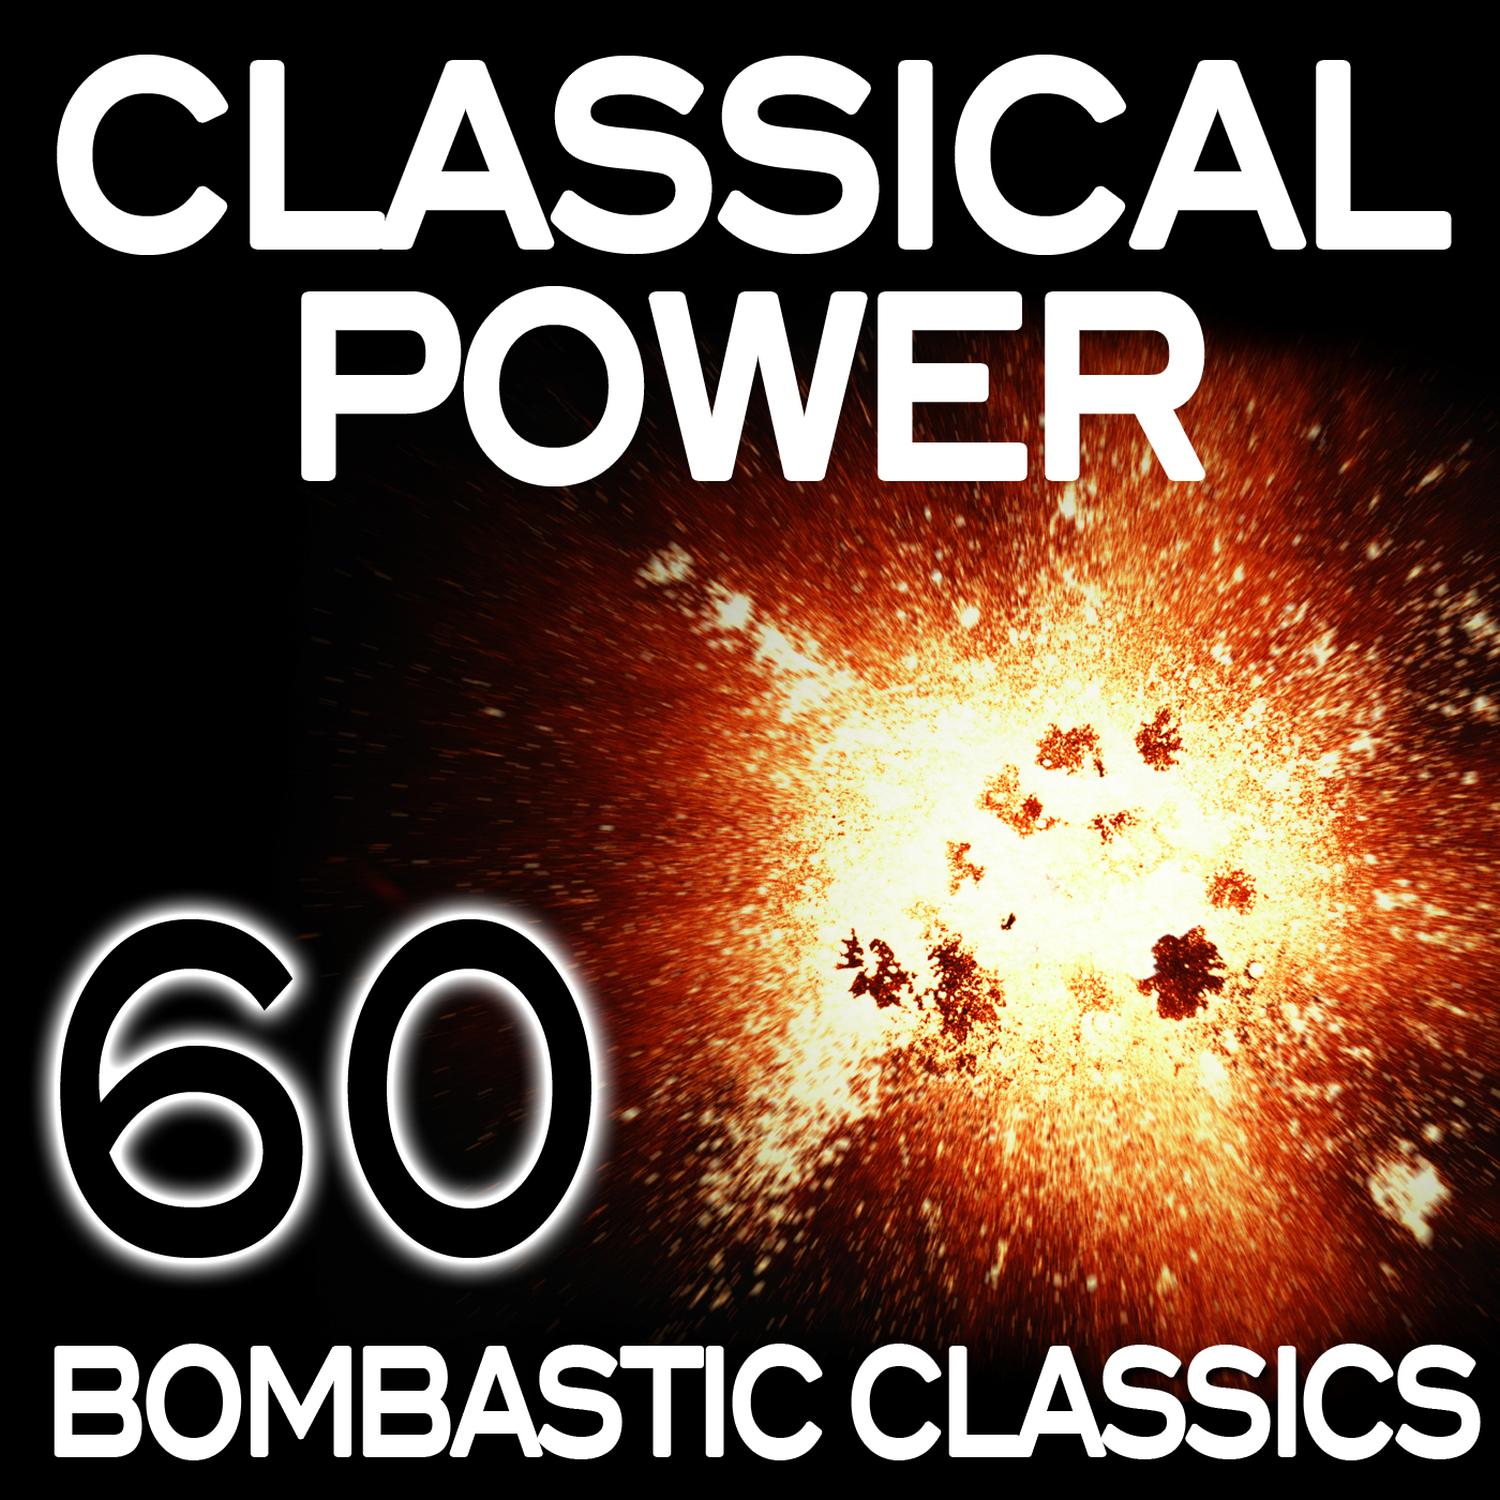 Classical Power - 60 Bombastic Classics